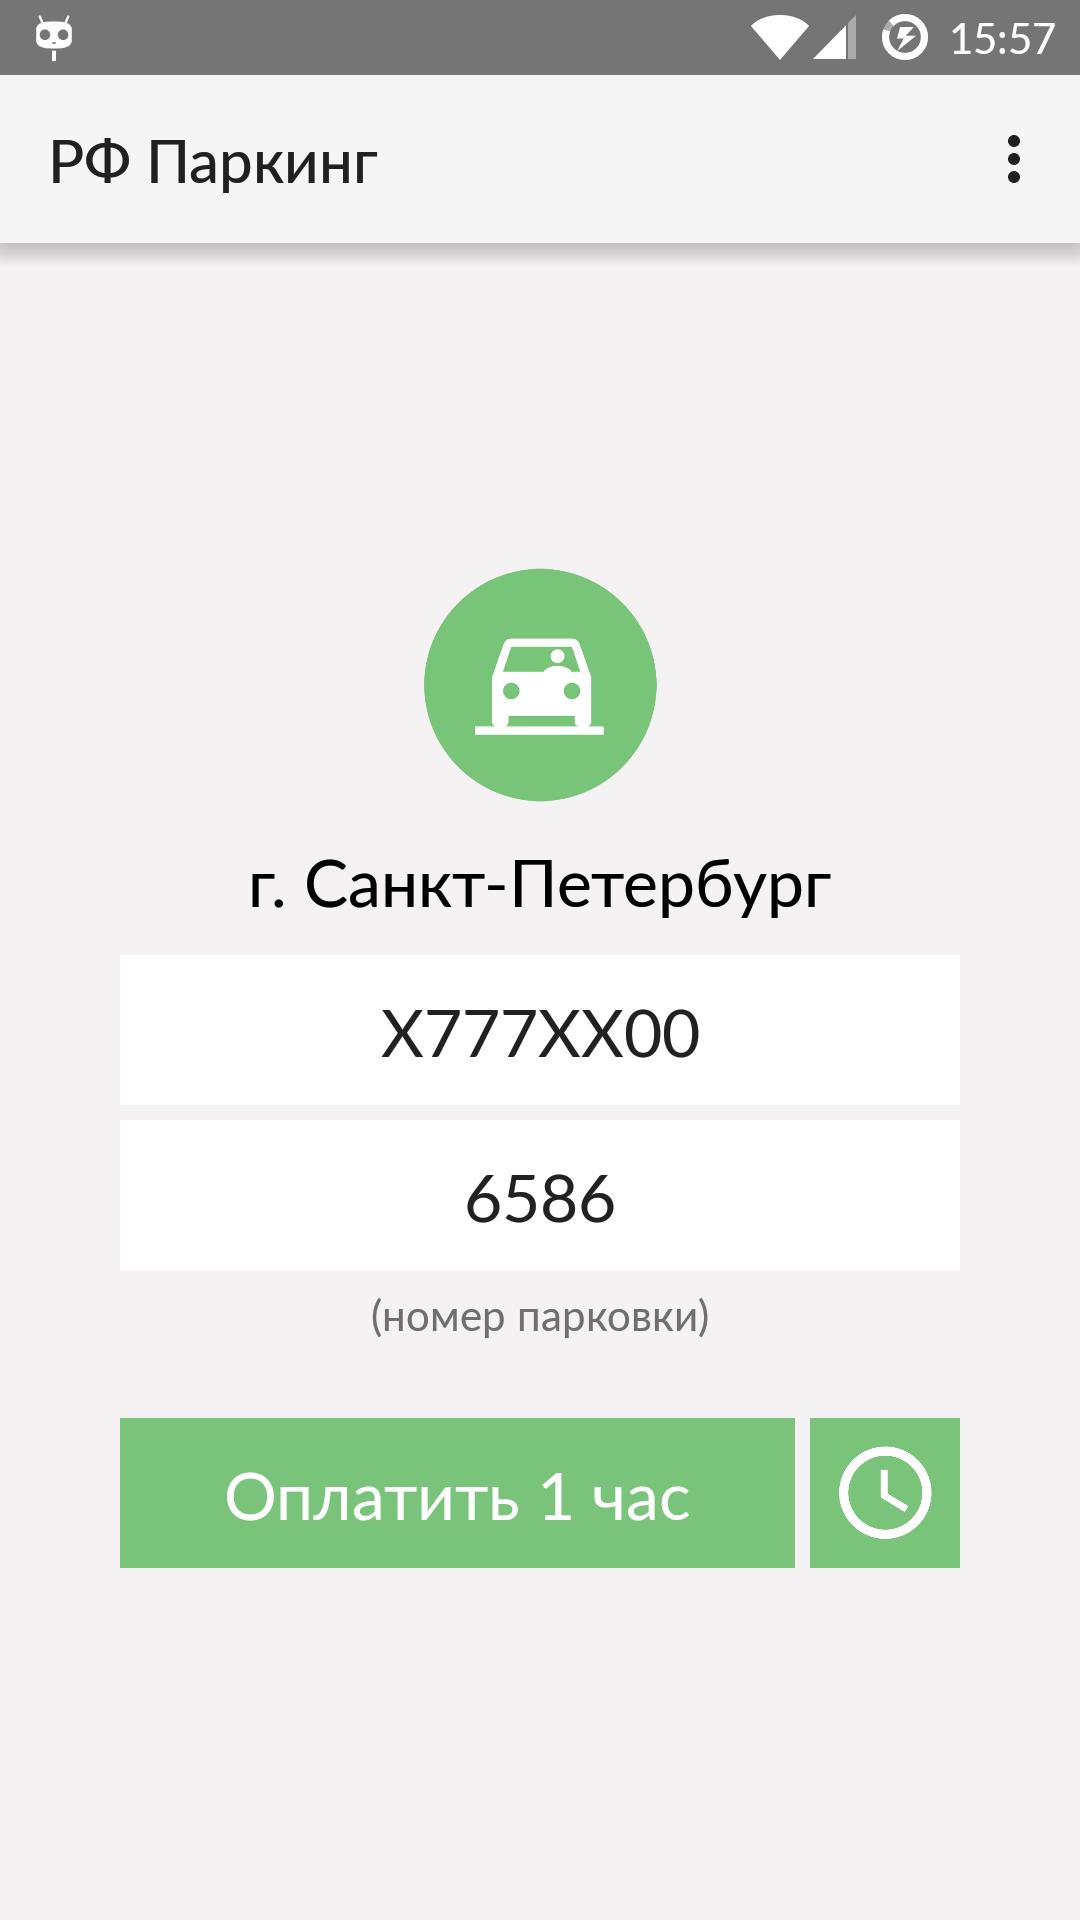 Android application РФ Паркинг - Парковка в России screenshort